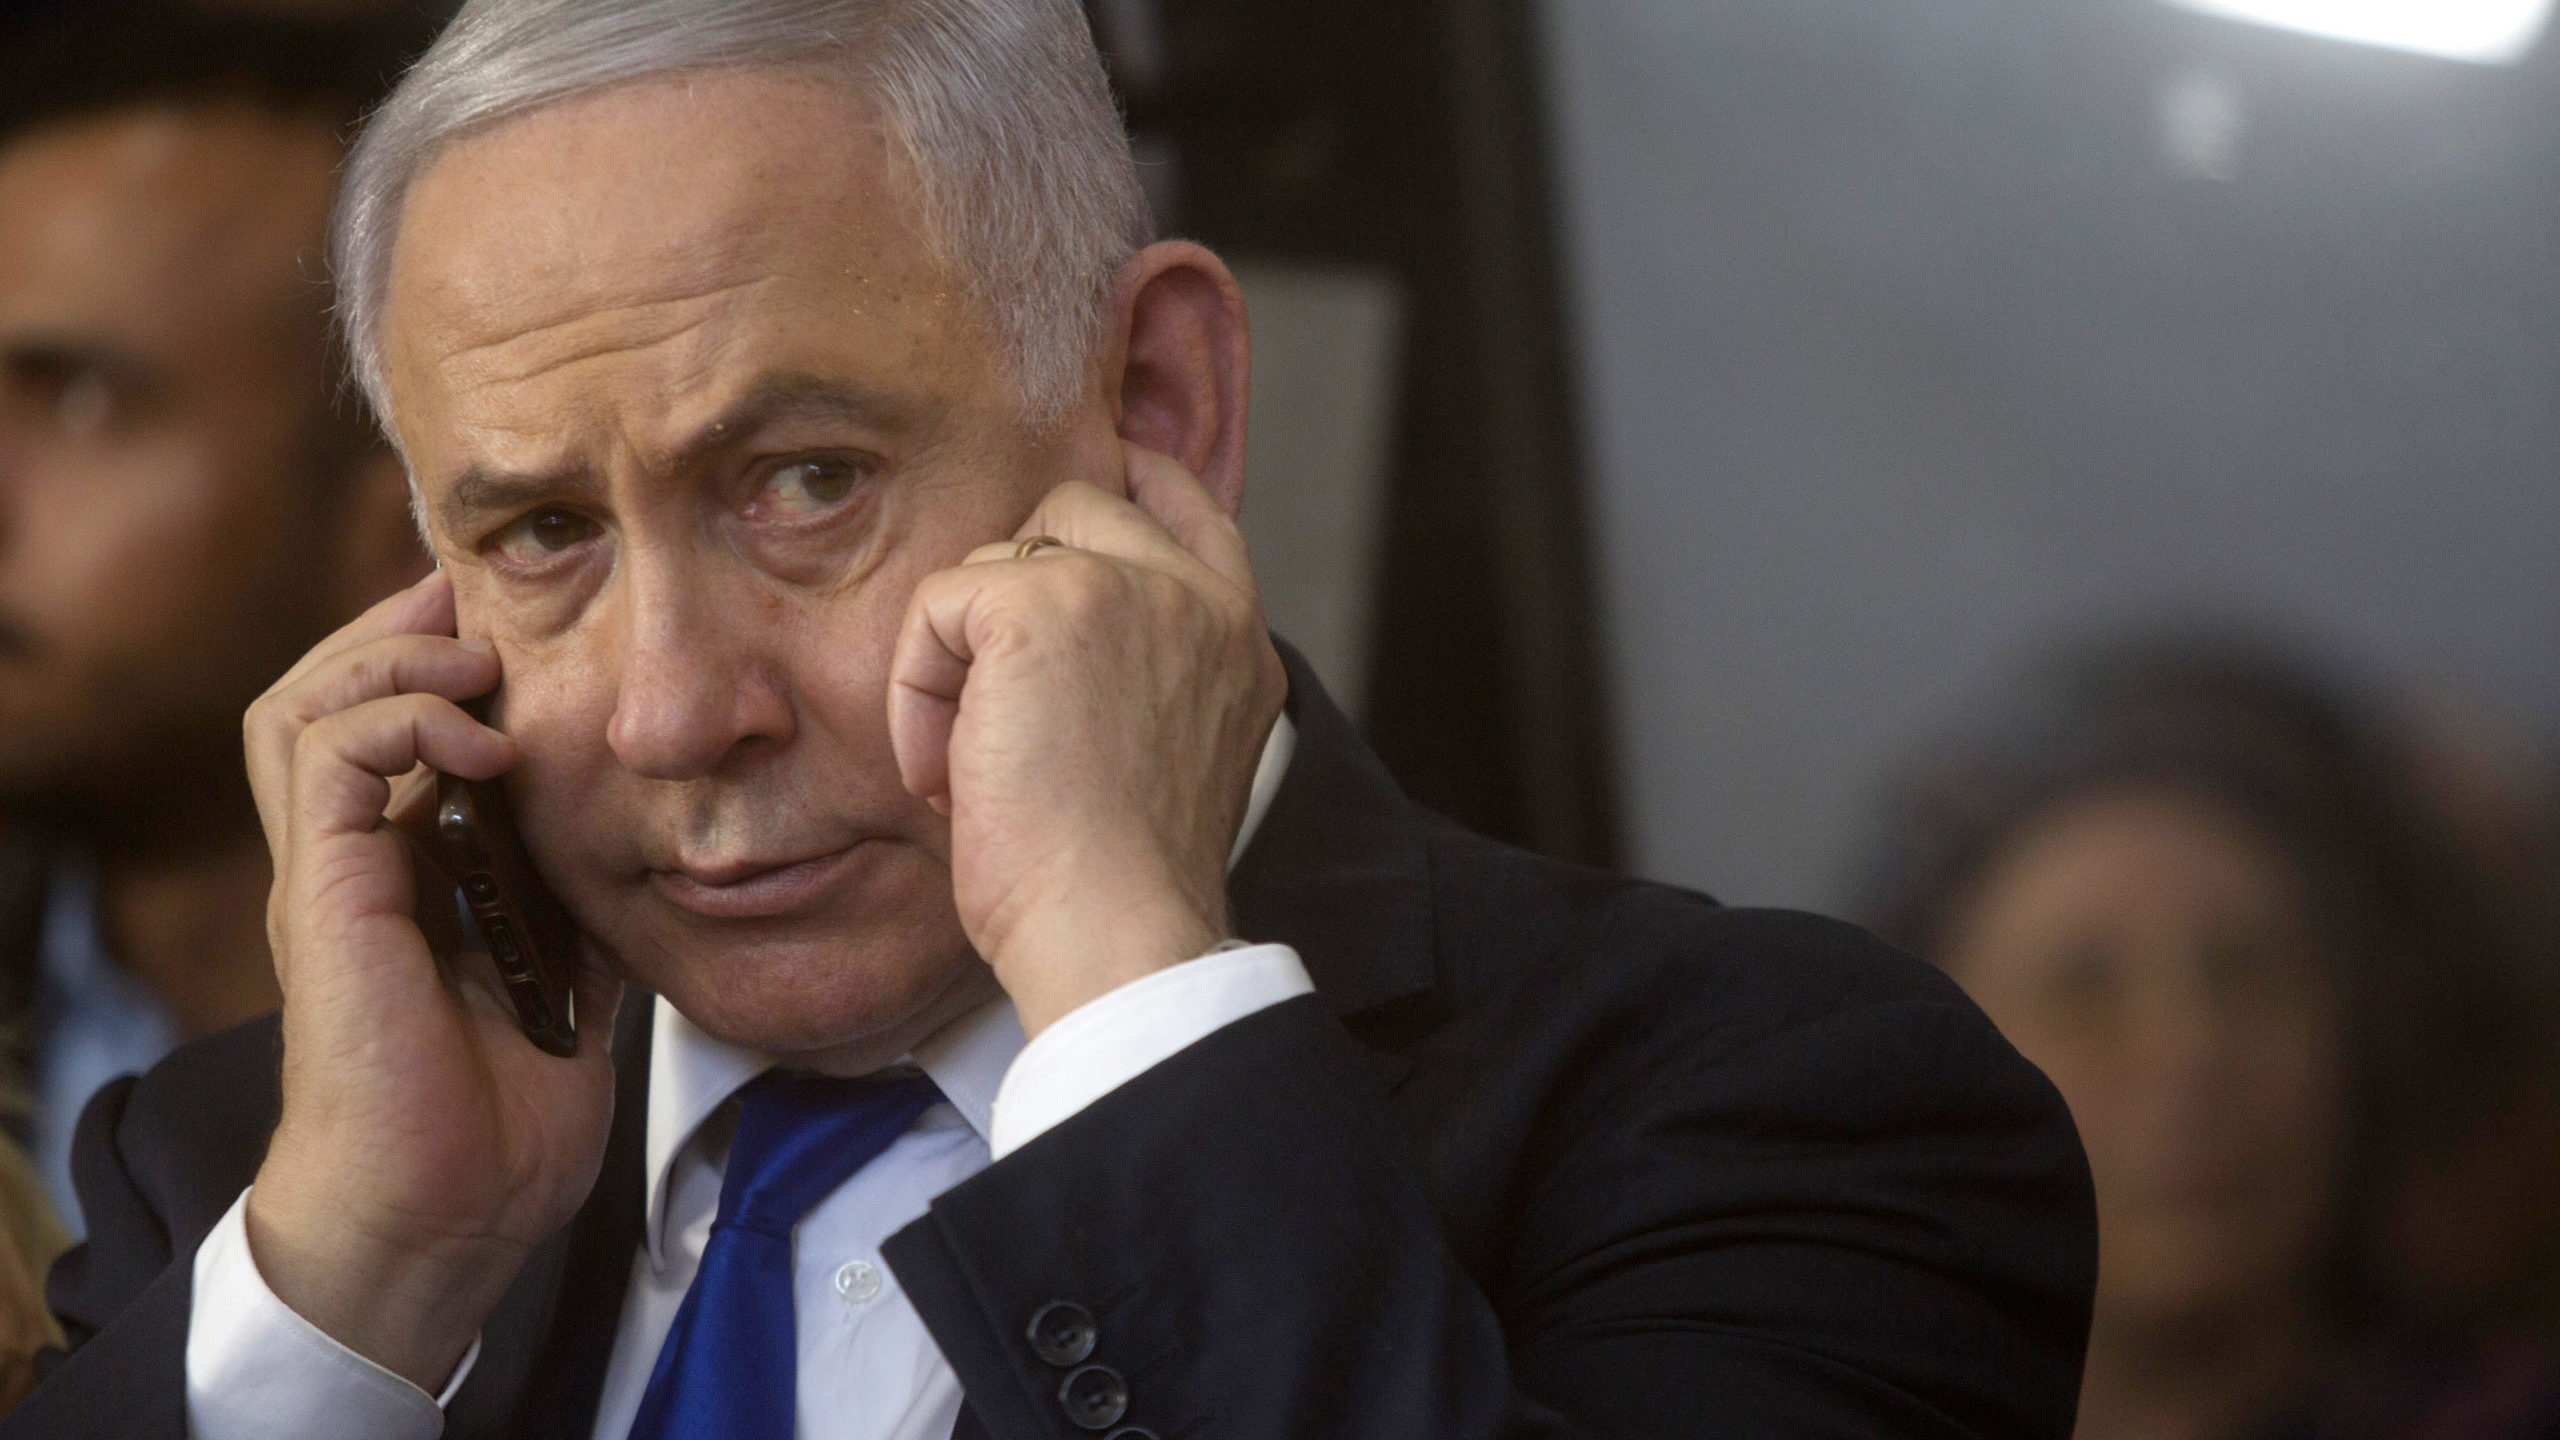 President Biden Not Expected to Call Riyadh, Will Call Netanyahu ‘Soon’